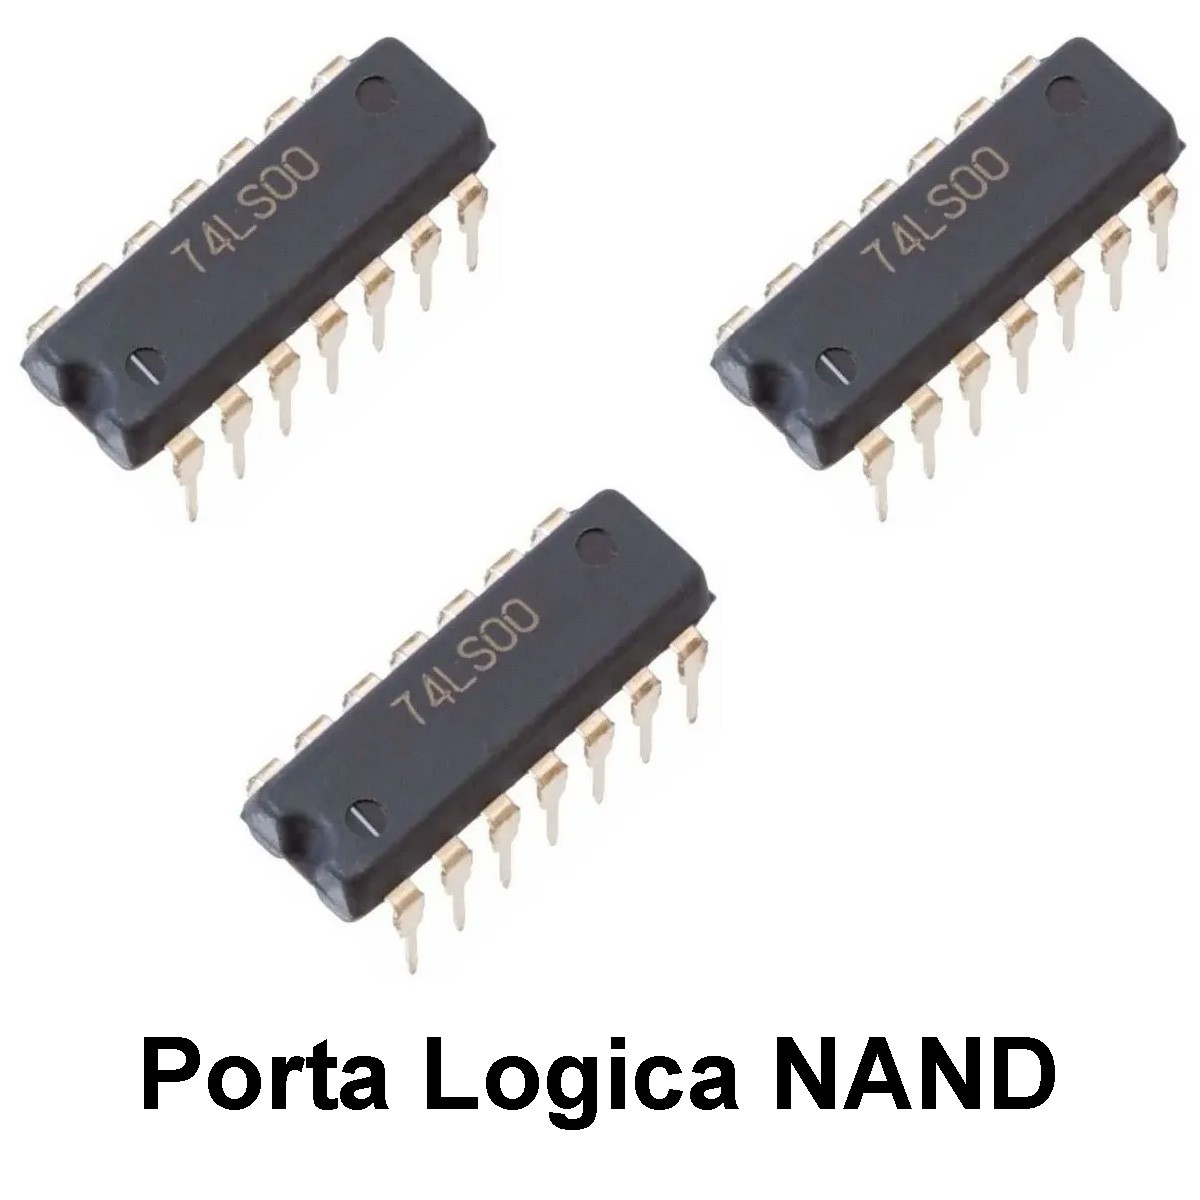 3x Porta Lógica NAND Circuito Integrado - CI 74LS00